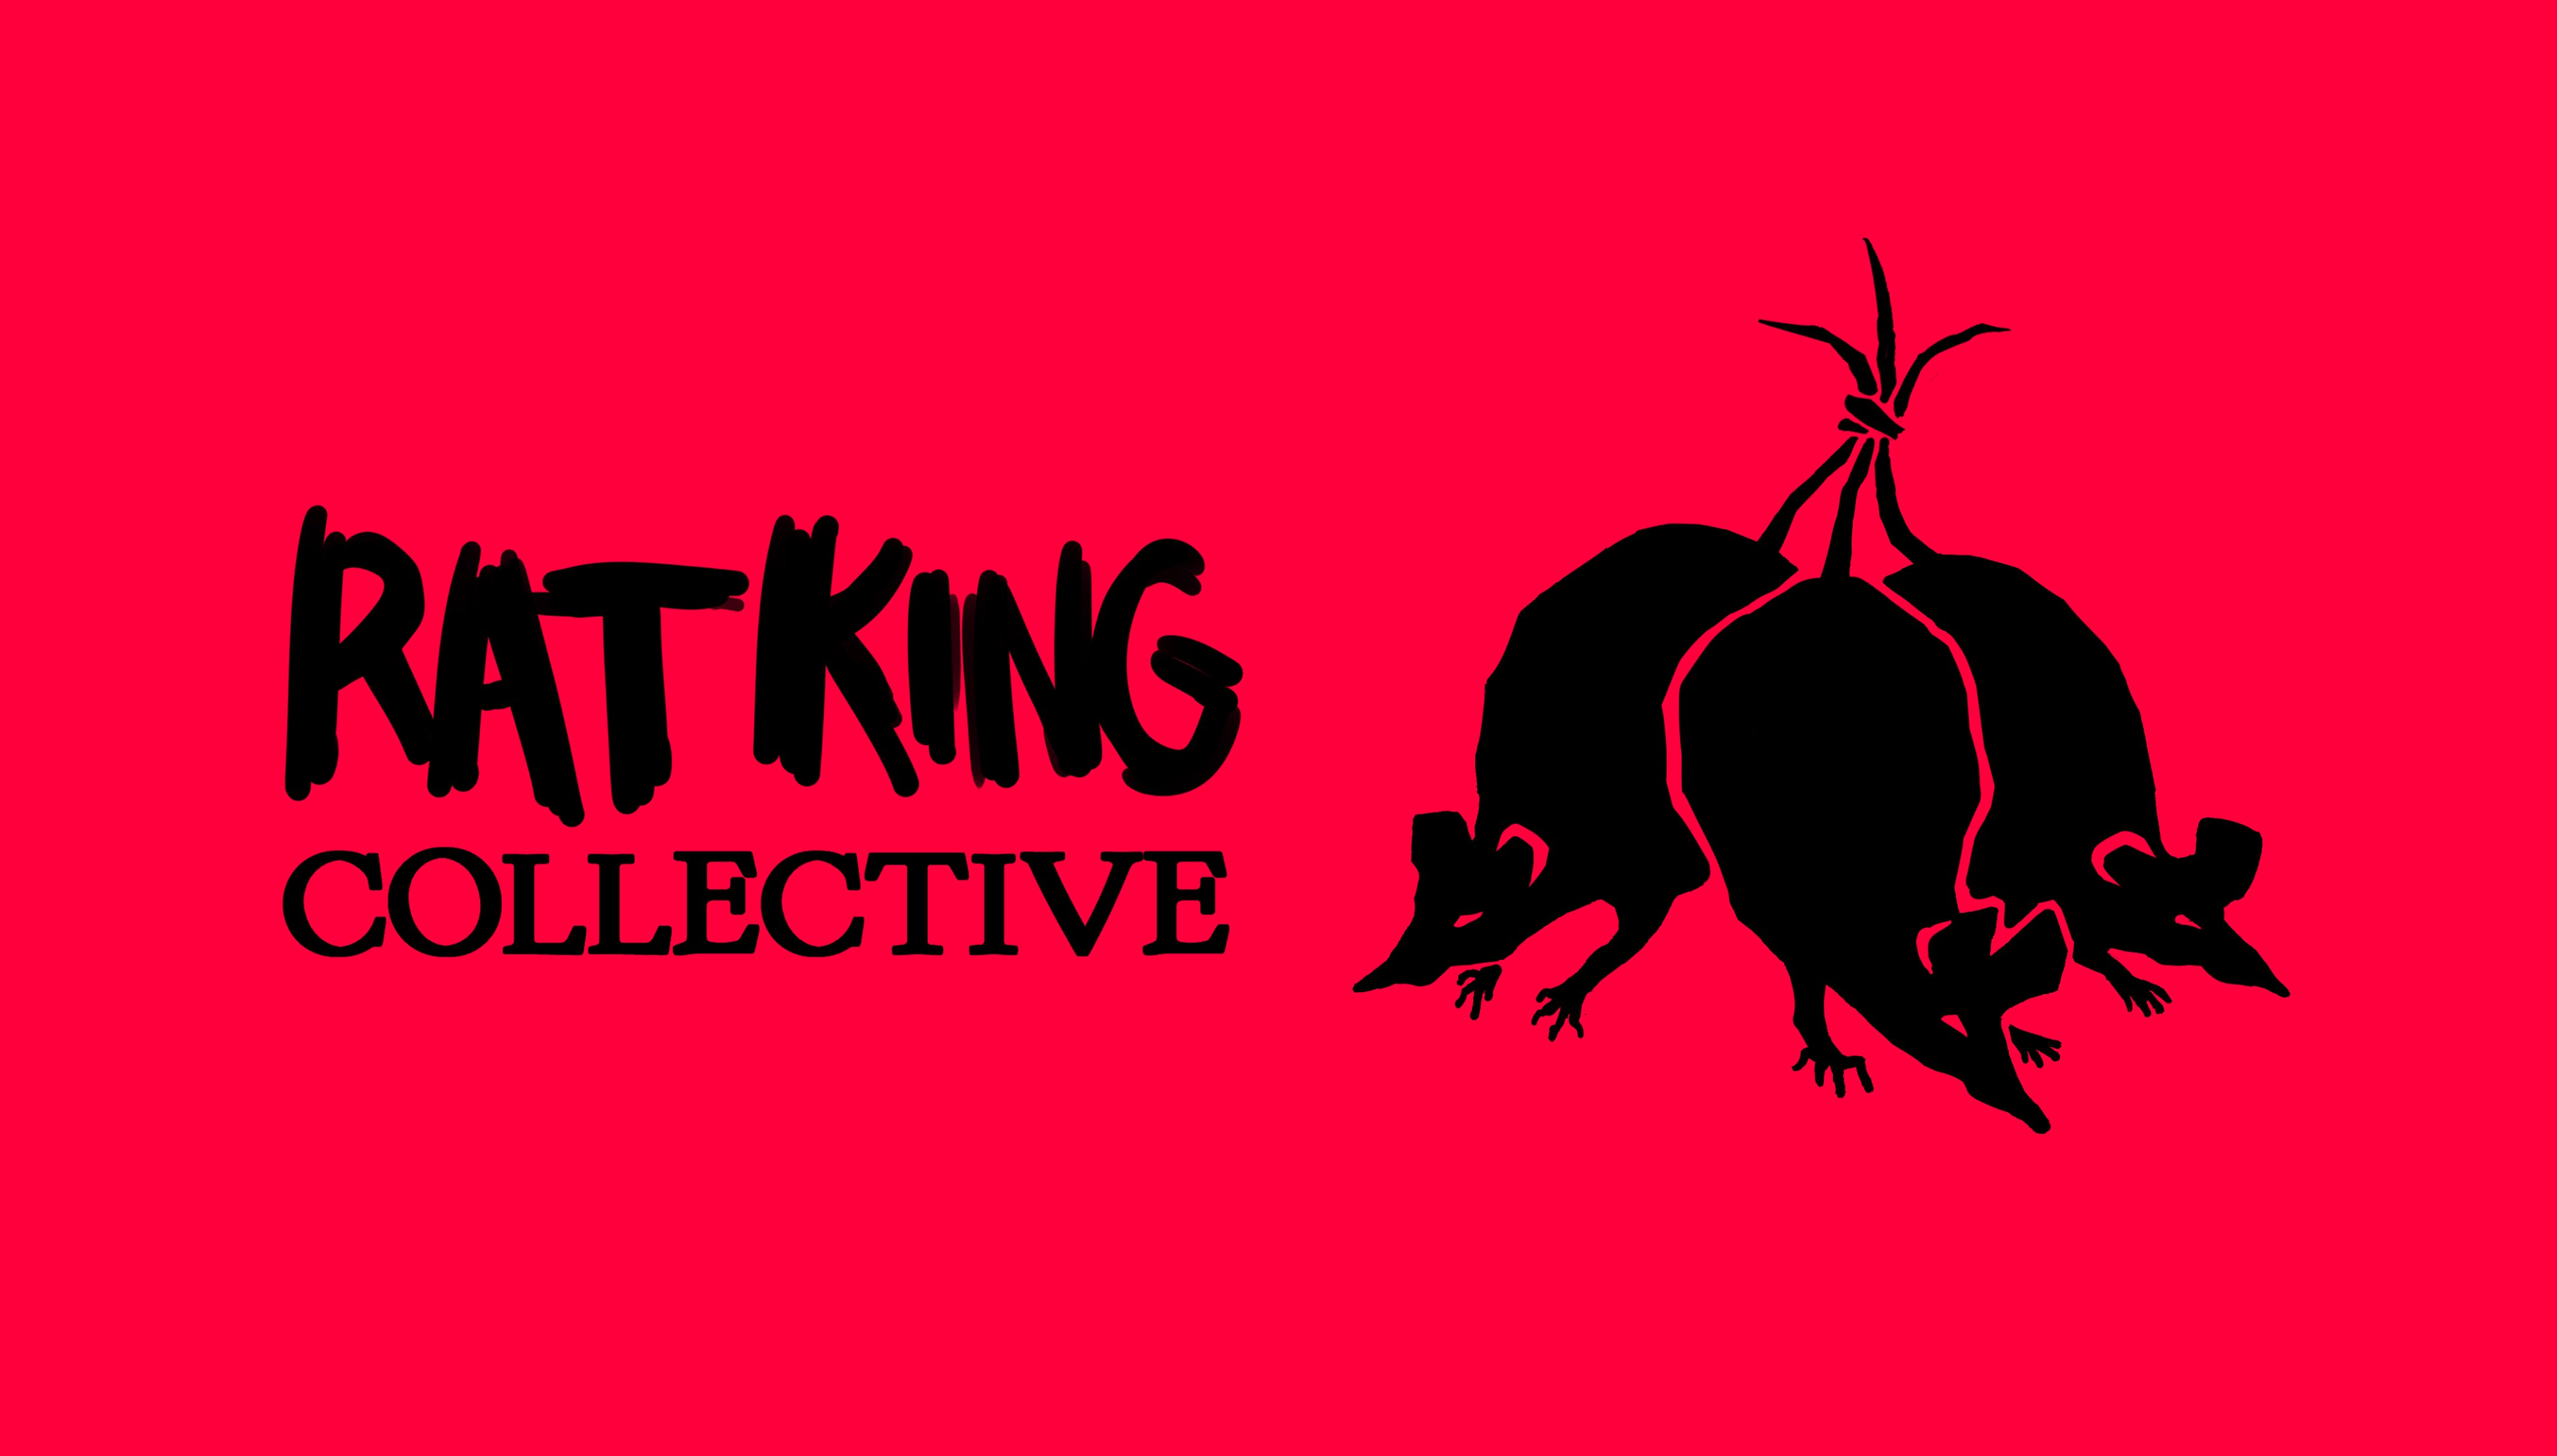 The Rat King 🐀 (@RattusKingus) / X